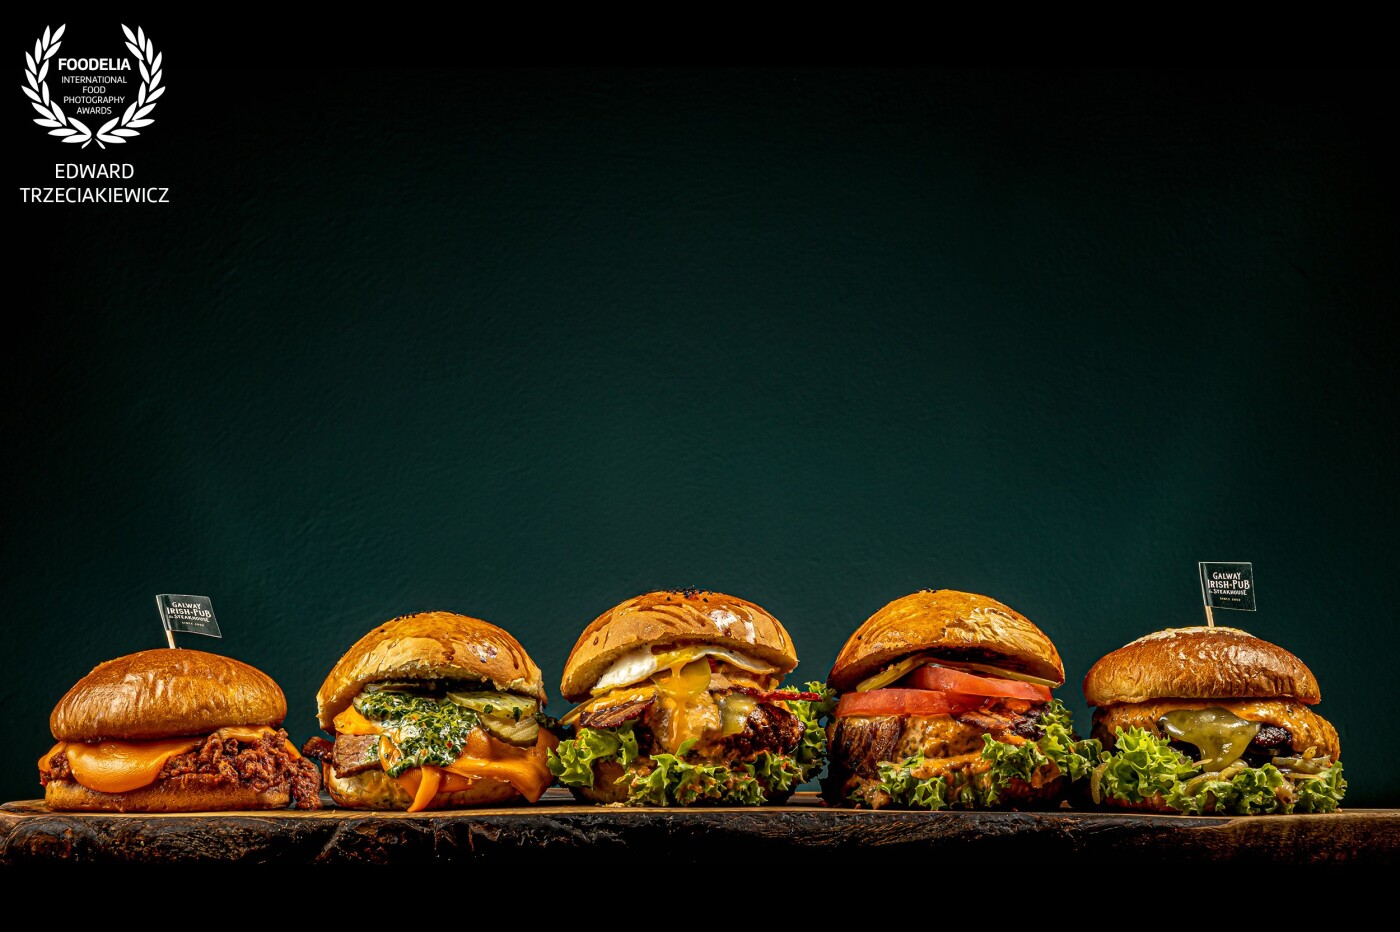 Photosesion for Irish Pub & SteakHouse in Rzeszów, Poland<br />
@irish_rzeszow<br />
<br />
Set of Hamburgers:<br />
From the left side<br />
1 Sloppy Joe <br />
2. Brisket Burger <br />
3. Egg Burger<br />
4. Philly Cheese Burger<br />
5. Smash Burger<br />
<br />
Chef Maciej Grubman<br />
@maciej_grubman